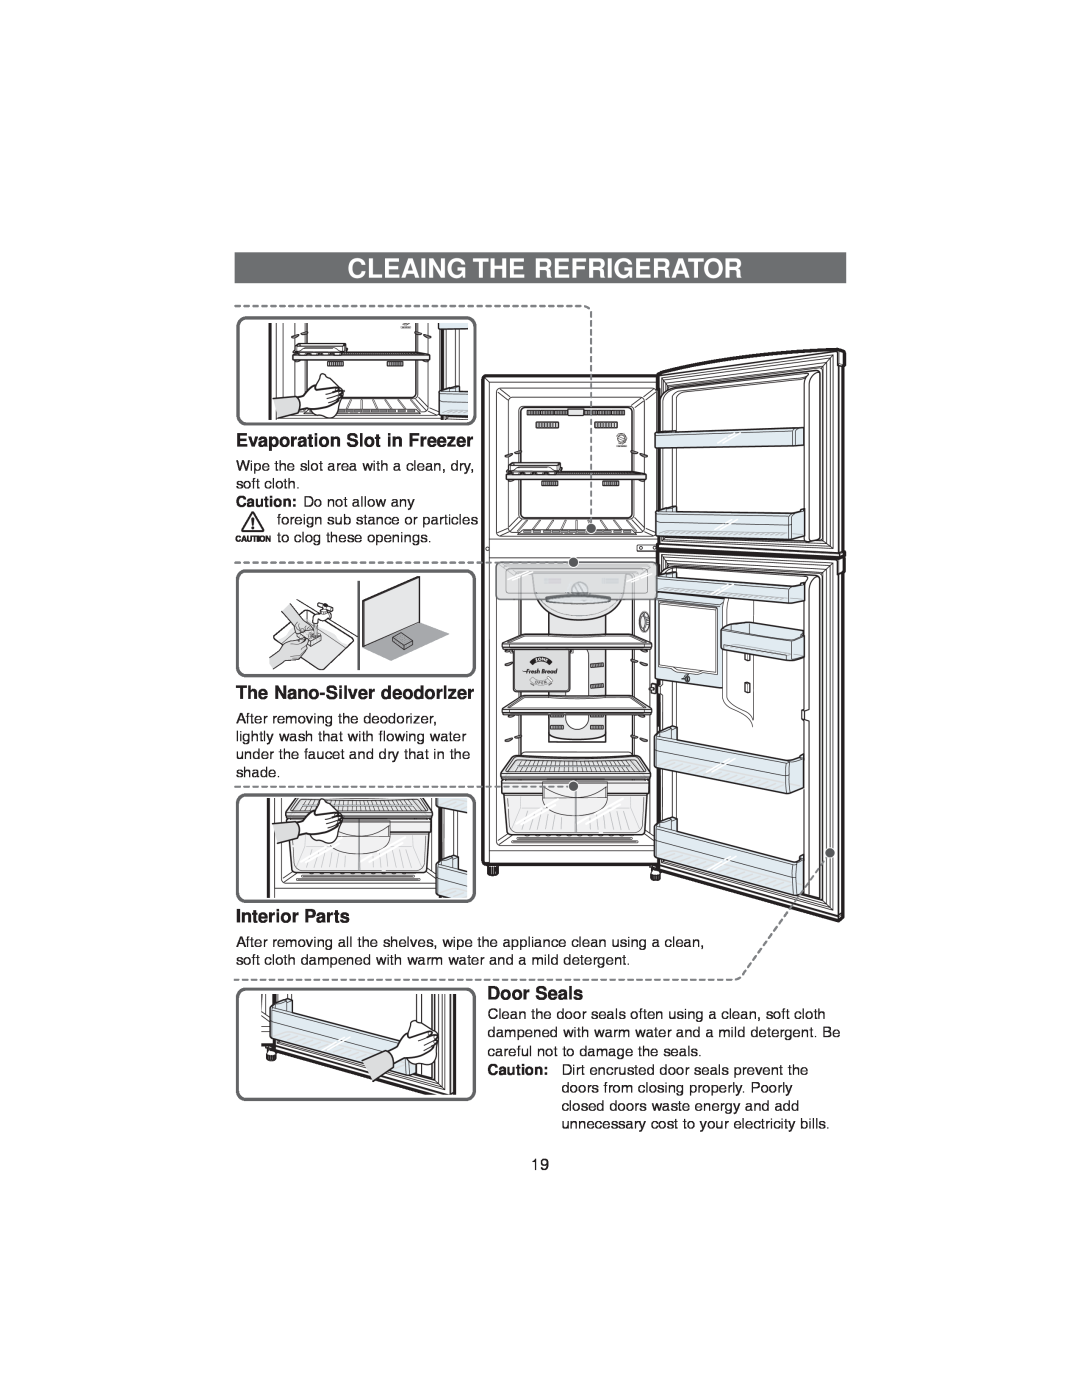 Samsung RT37S, RT37D Cleaing The Refrigerator, Evaporation Slot in Freezer, The Nano-Silver deodorlzer, Interior Parts 